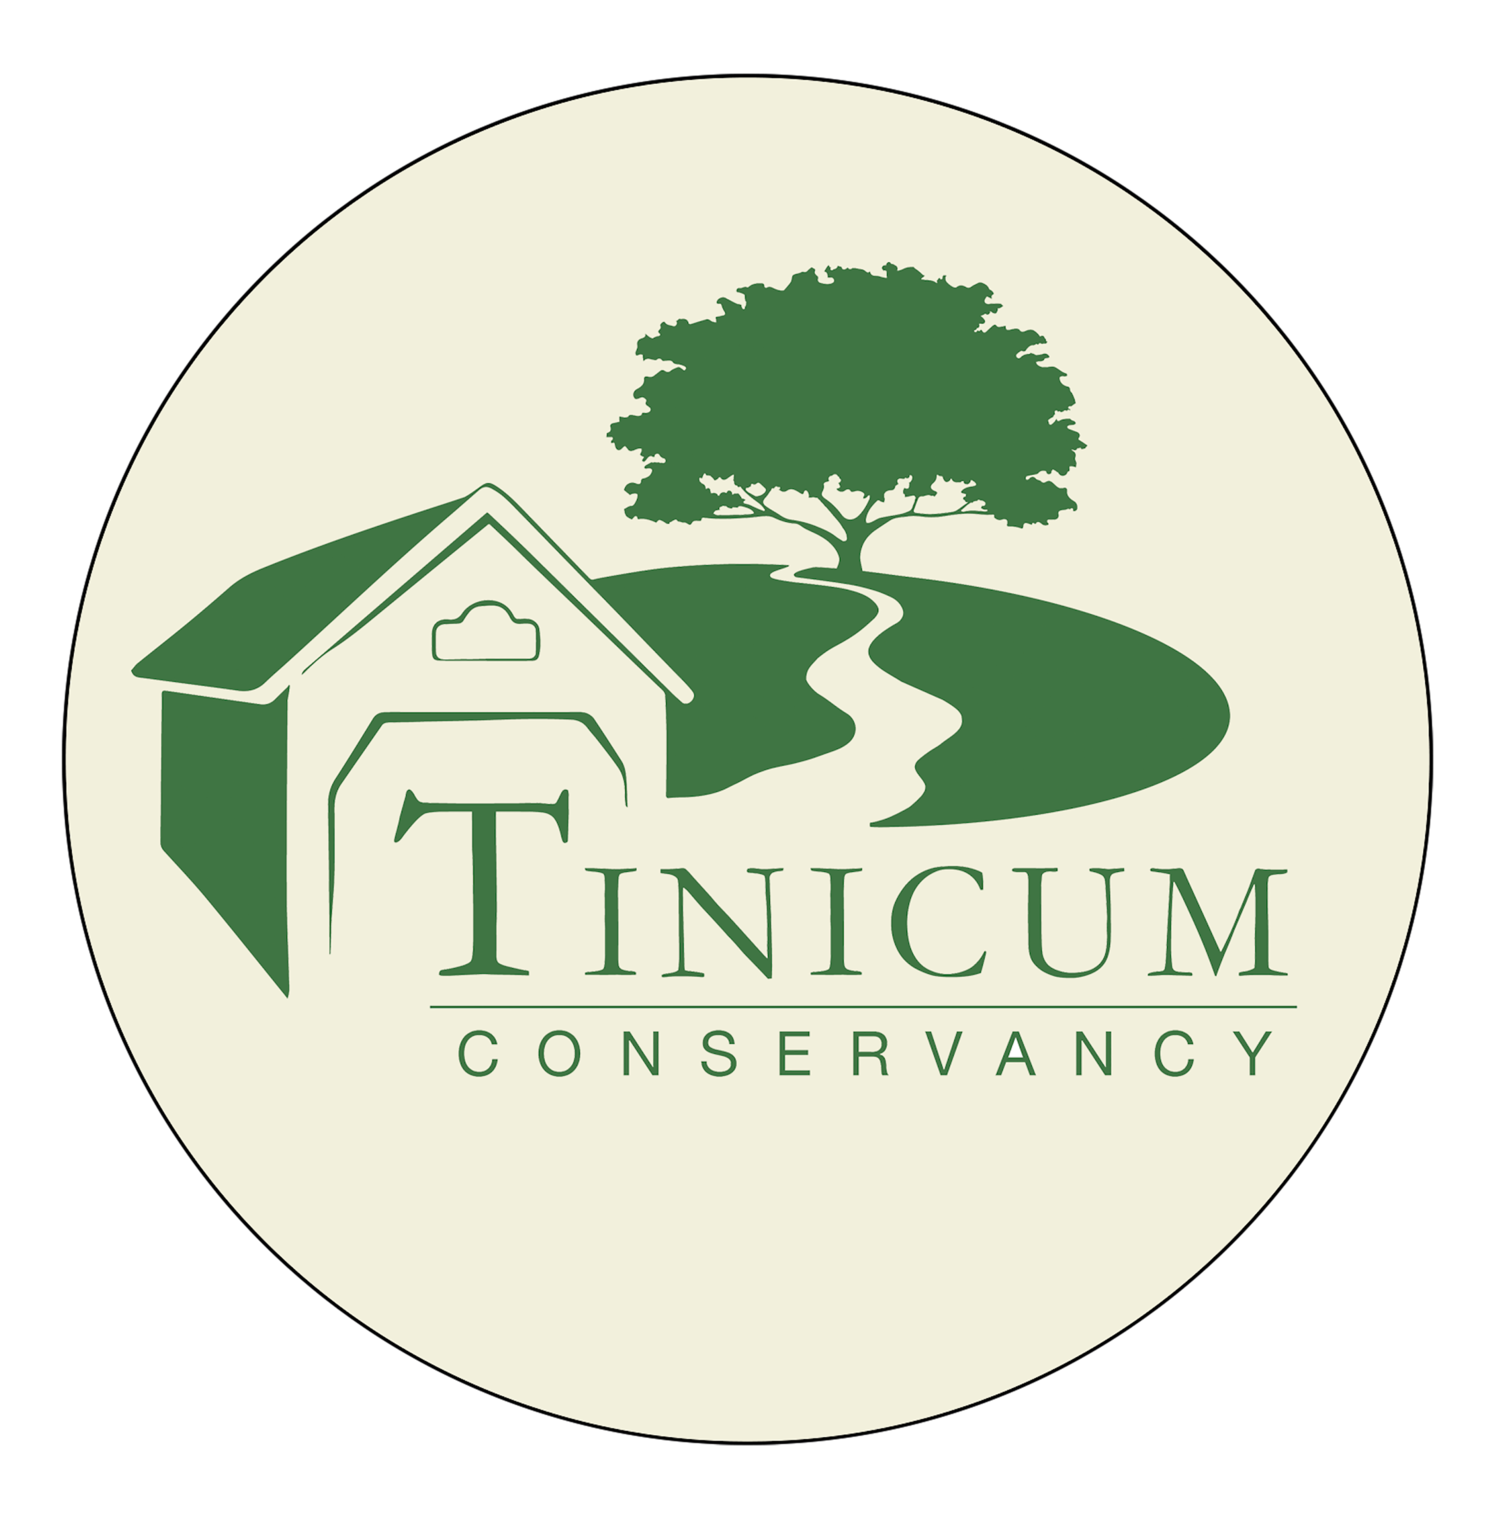 The Tinicum Conservancy